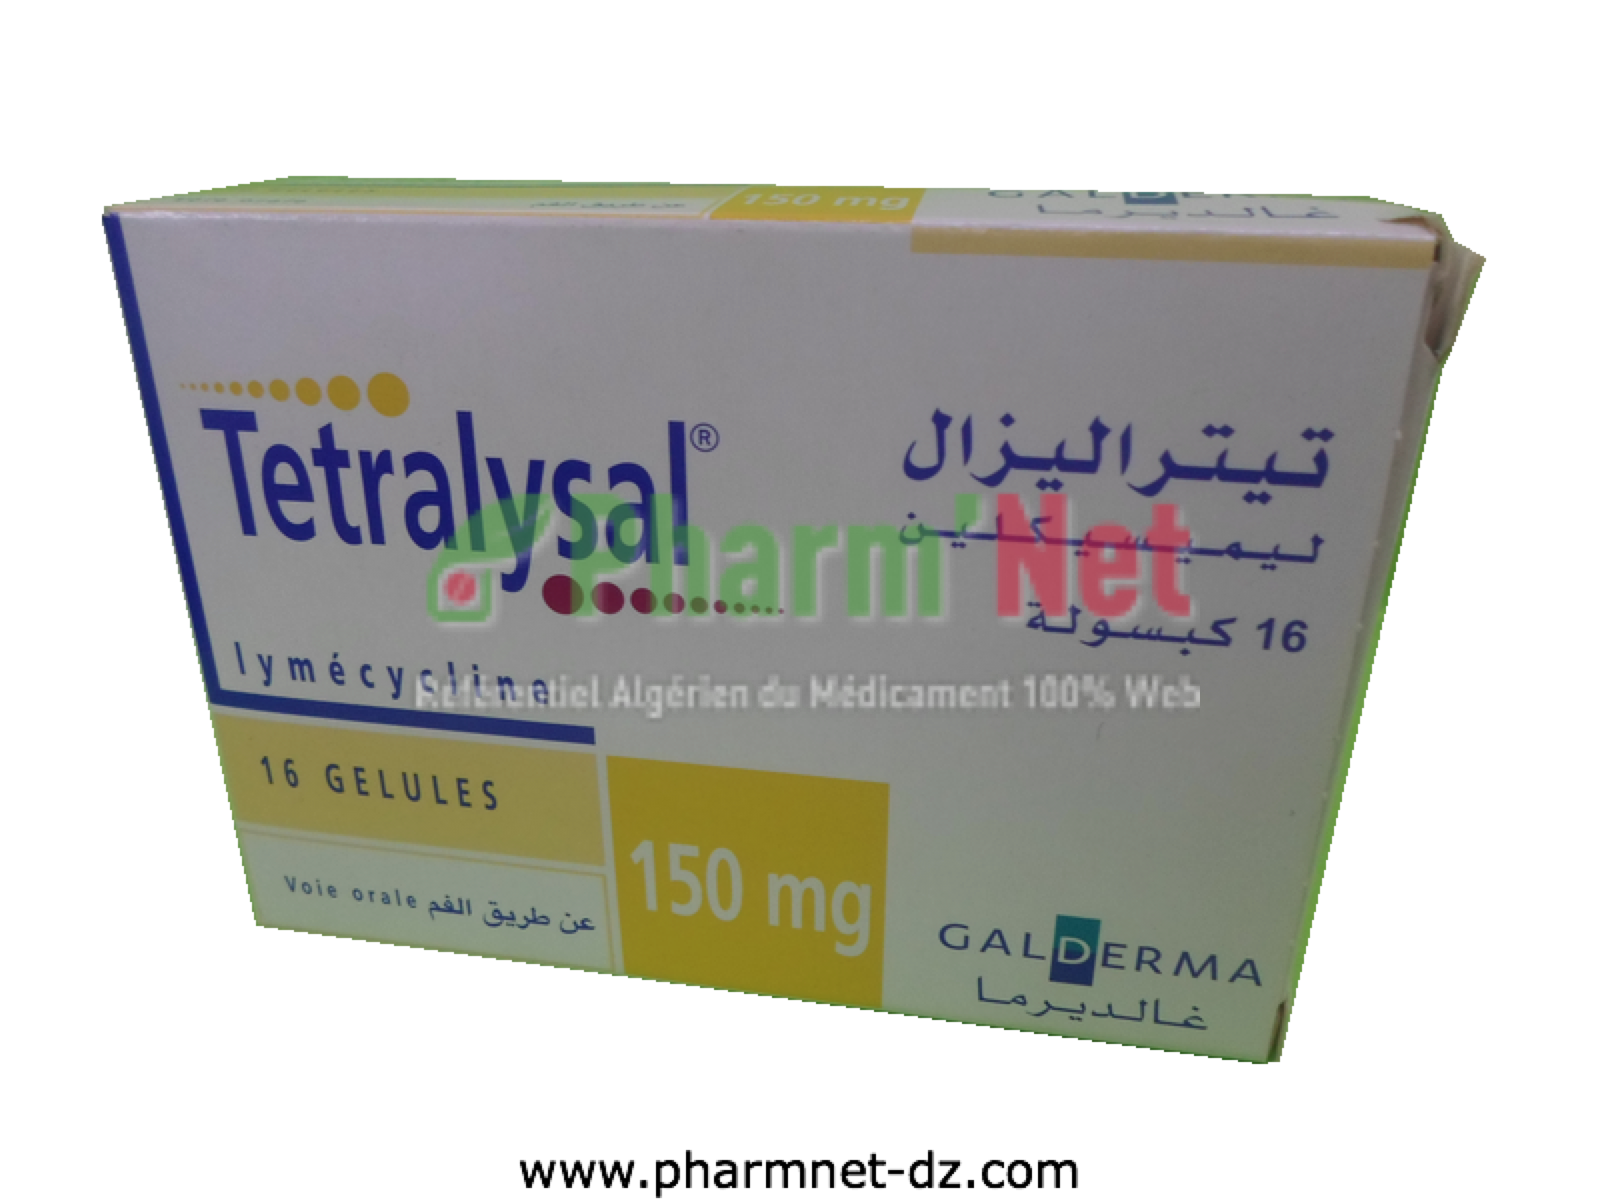 Tetralysal 150mg Gles B 16 Pharmnet Encyclopedie Des Medicaments En Algerie Propriete Sarl Esahti